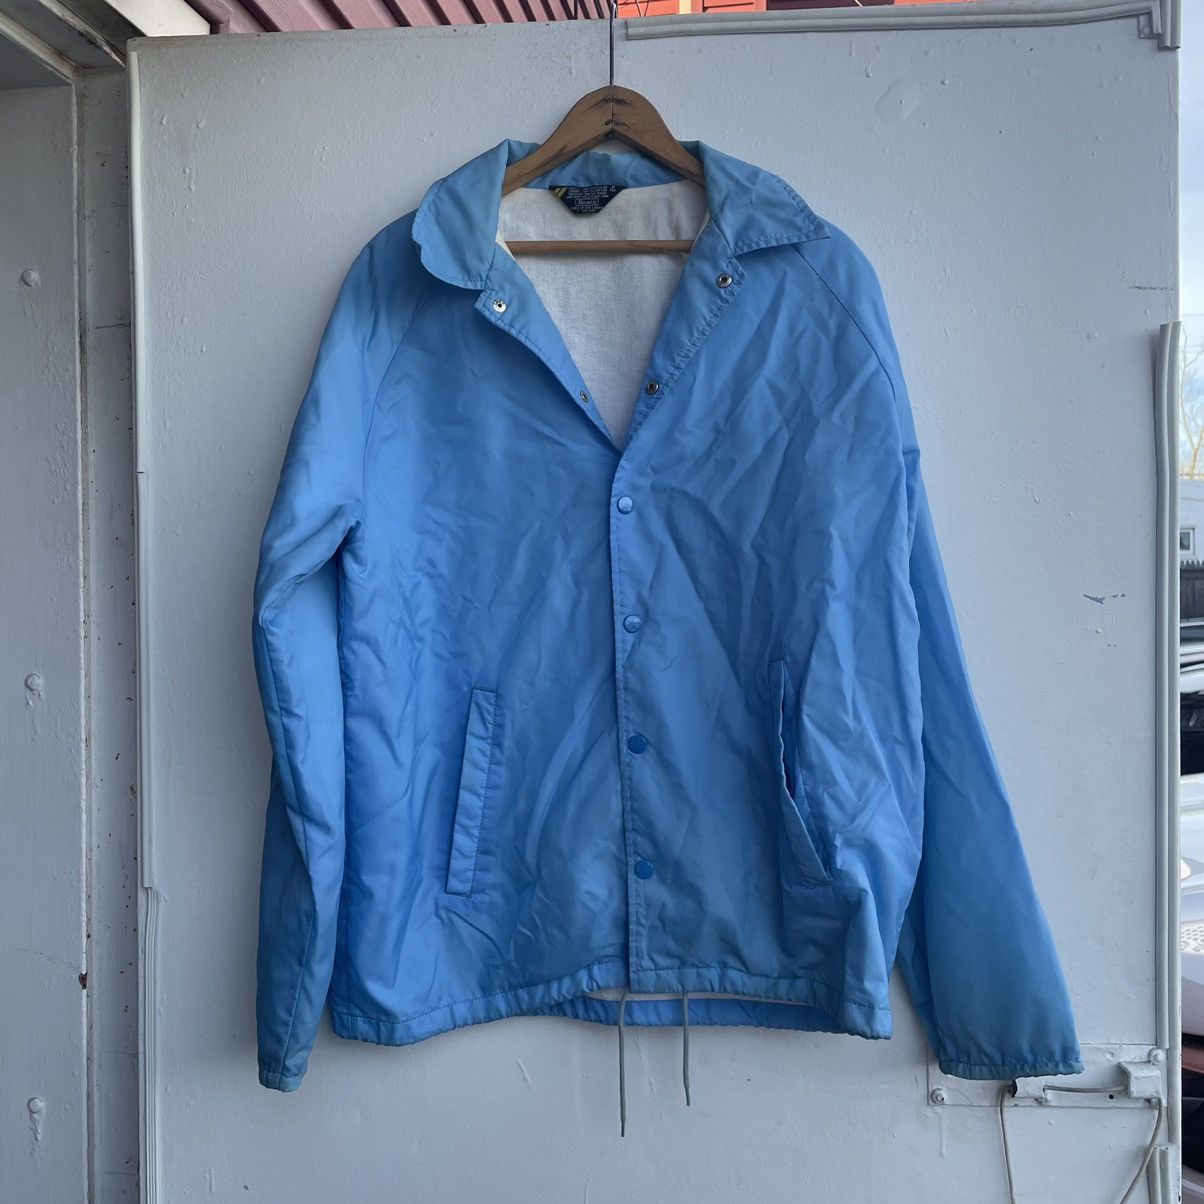 Vintage 70s sears coach jacket | Grailed